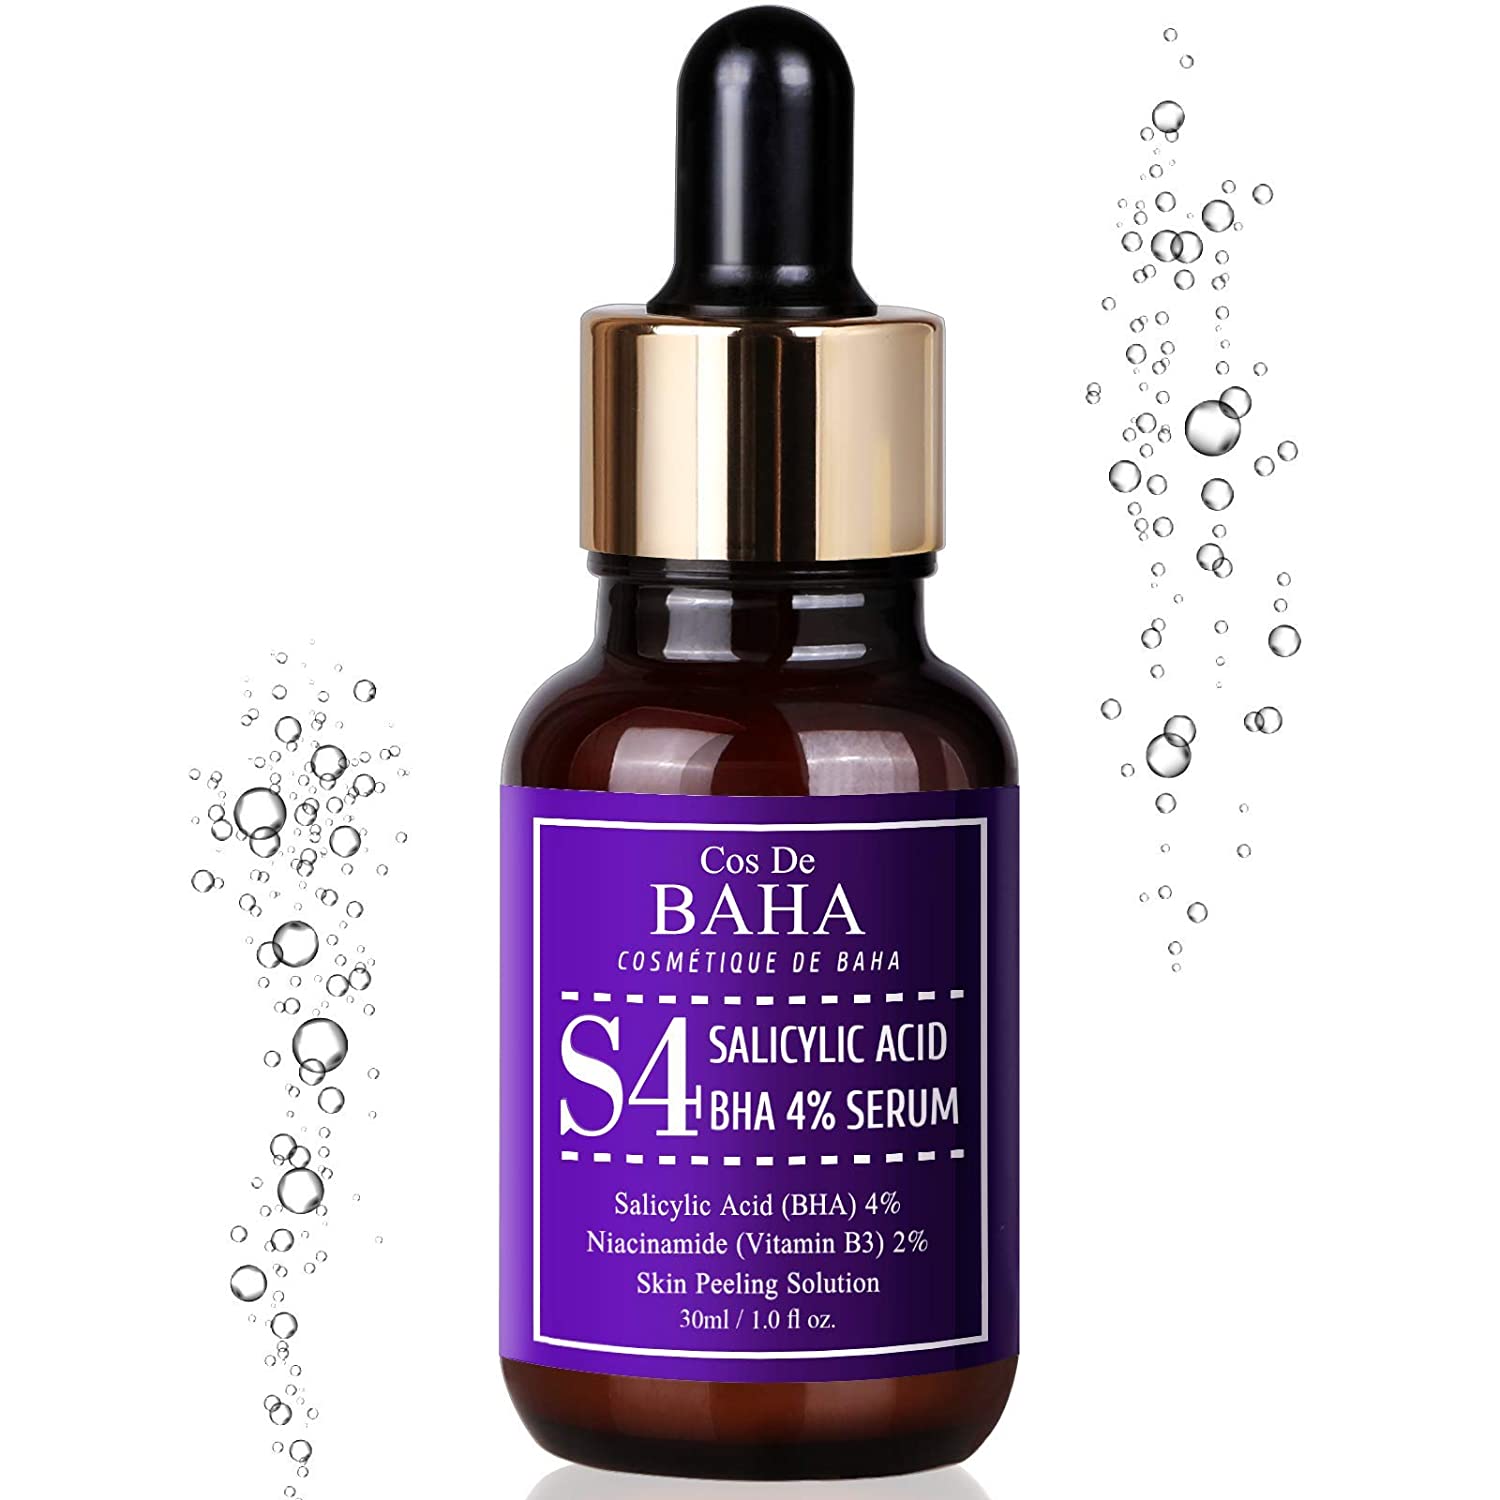 Cos de BAHA Salicylic Acid 4% (S4) BHA Exfoliating Facial Serum 30ml